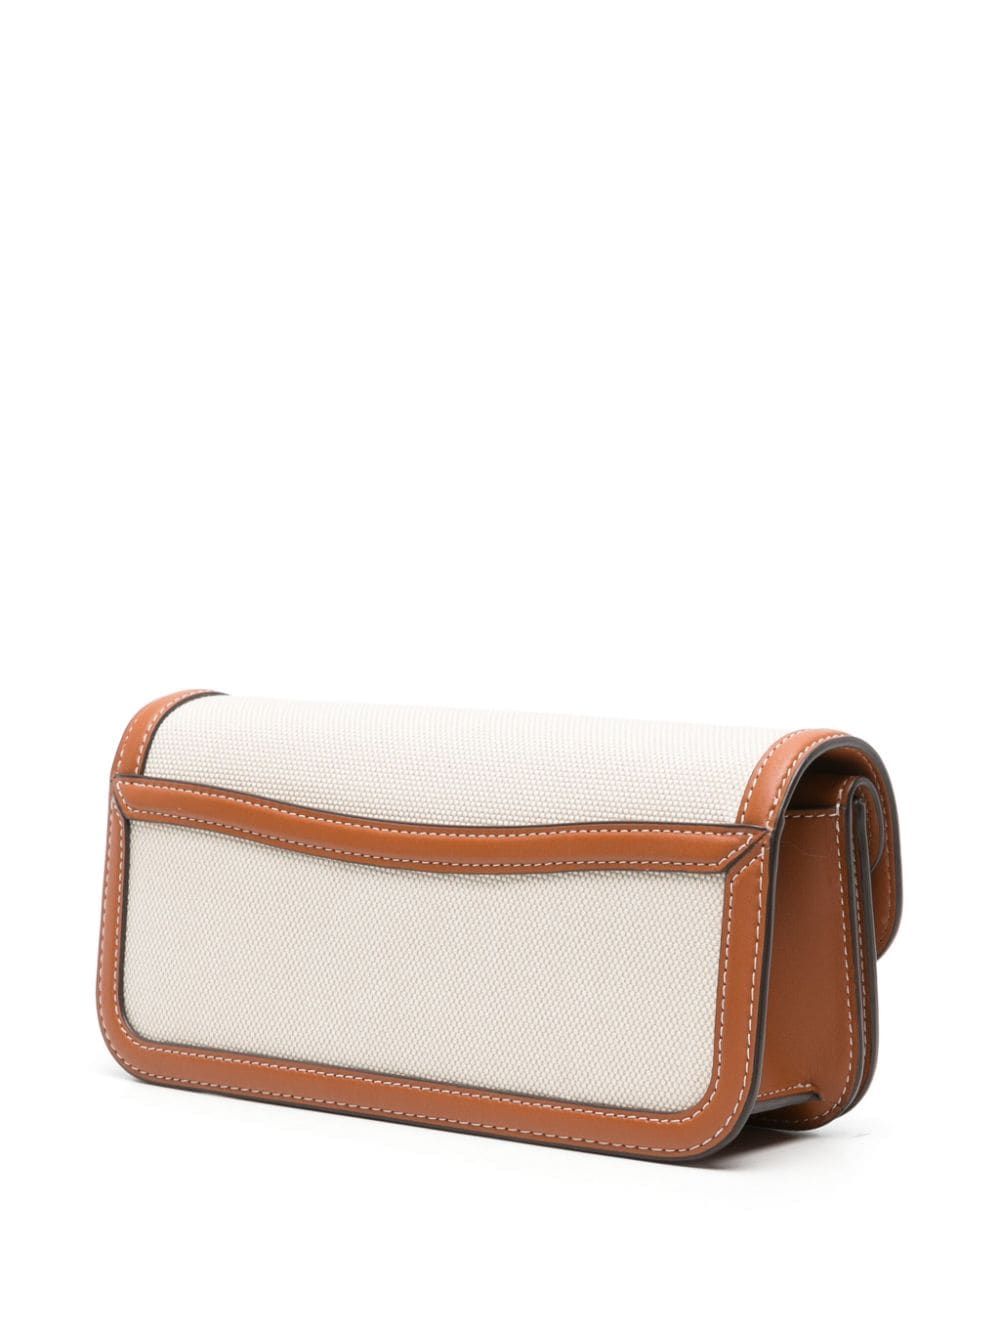 COACH Tan Mixed Material Shoulder Handbag for Women - SS24 Collection